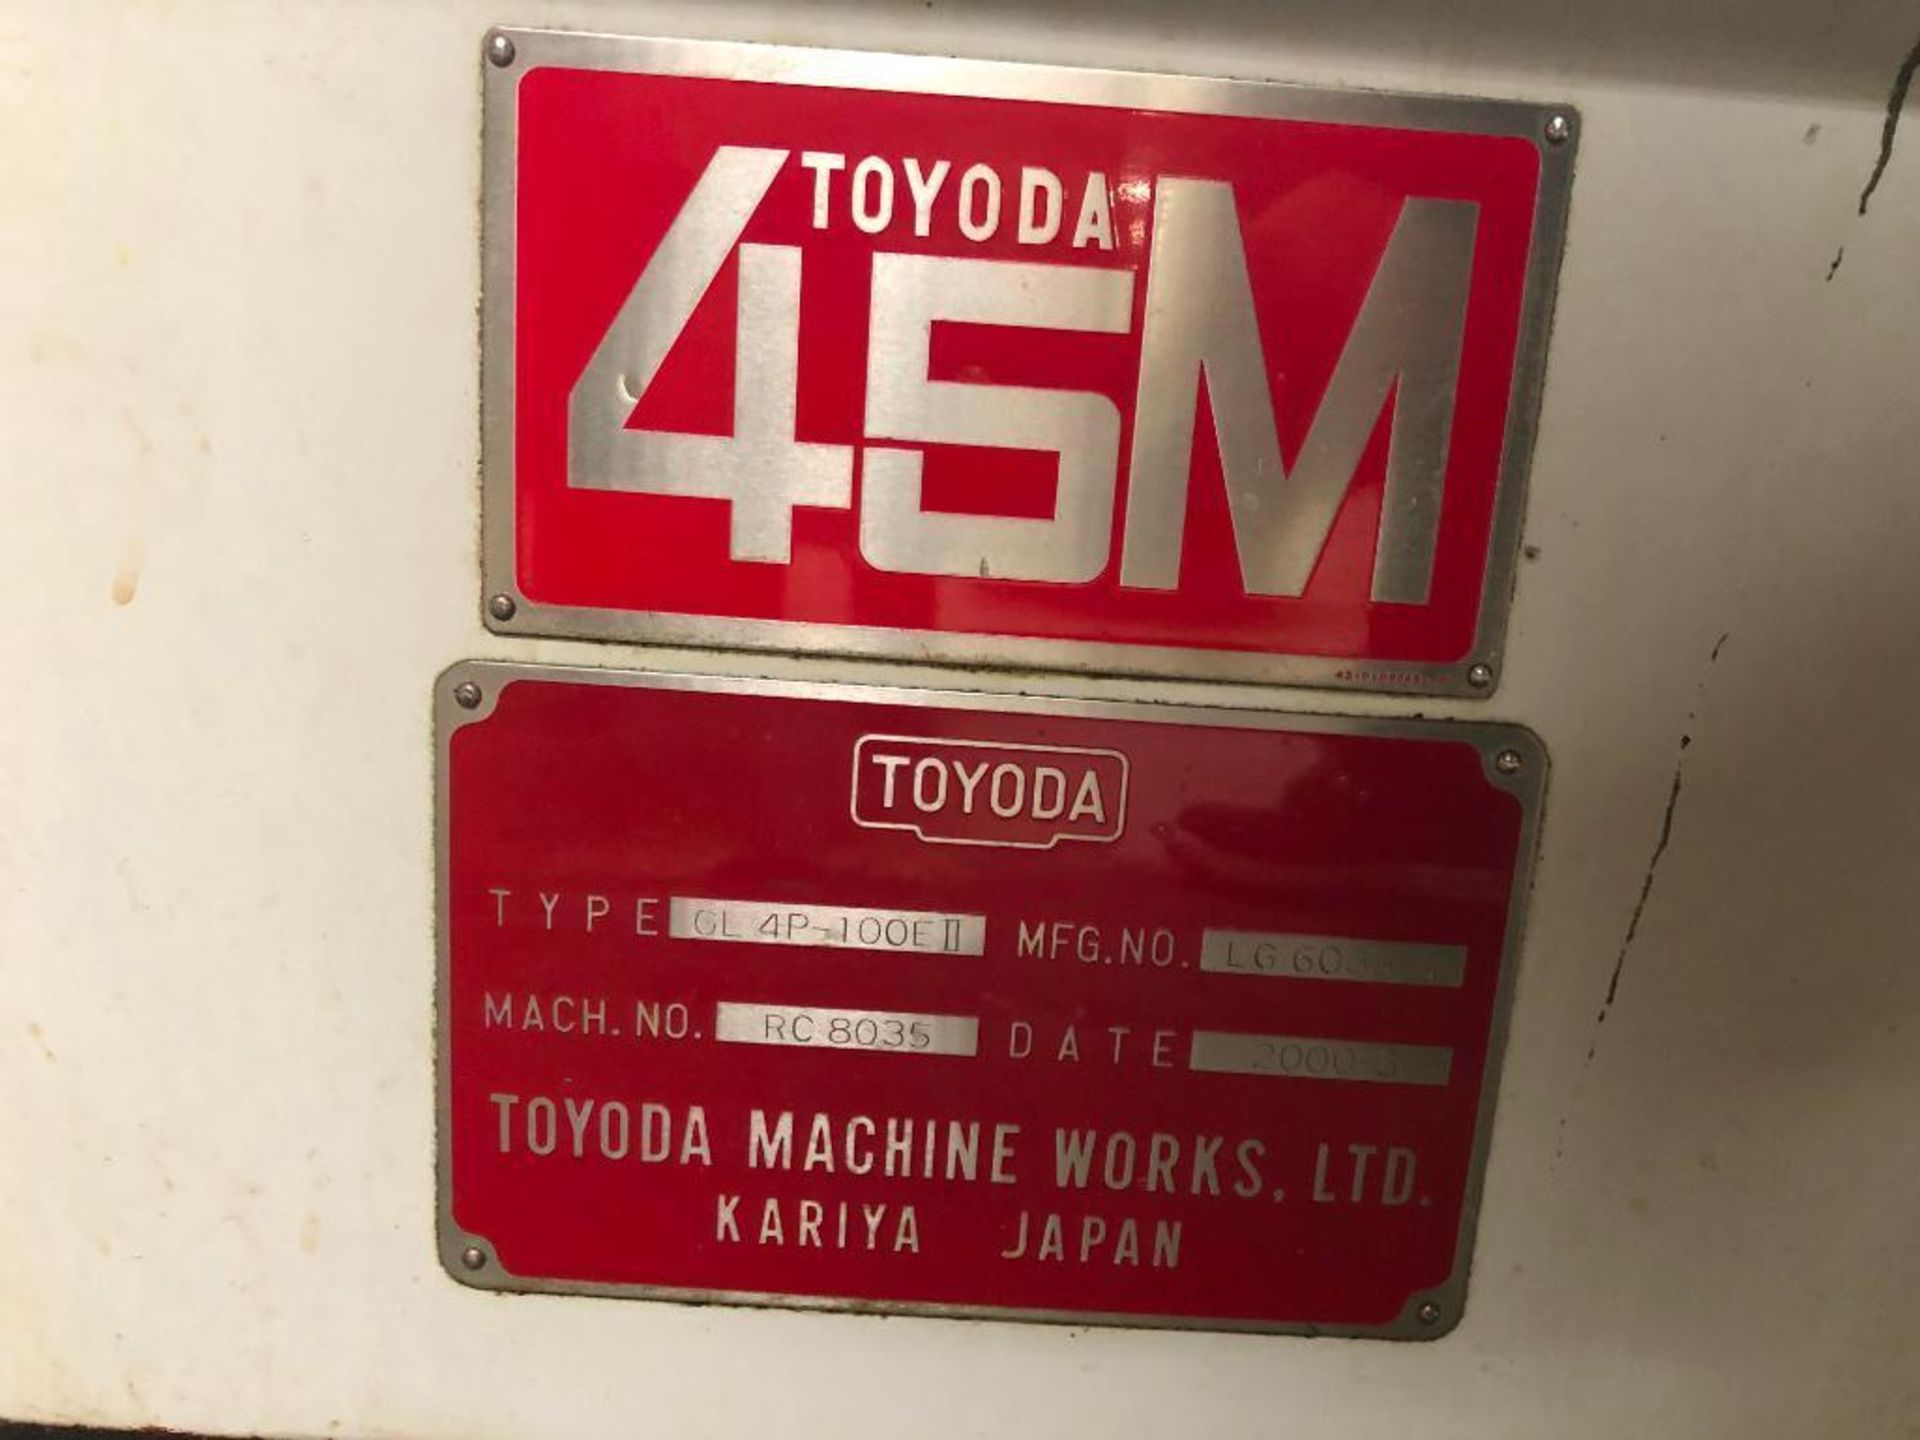 Toyoda Model: GL4E II / GL 4P-100E II CNC Cylindrical Grinder Serial#RC8035 (2000) Mfg. # LG6033-3 M - Image 24 of 25